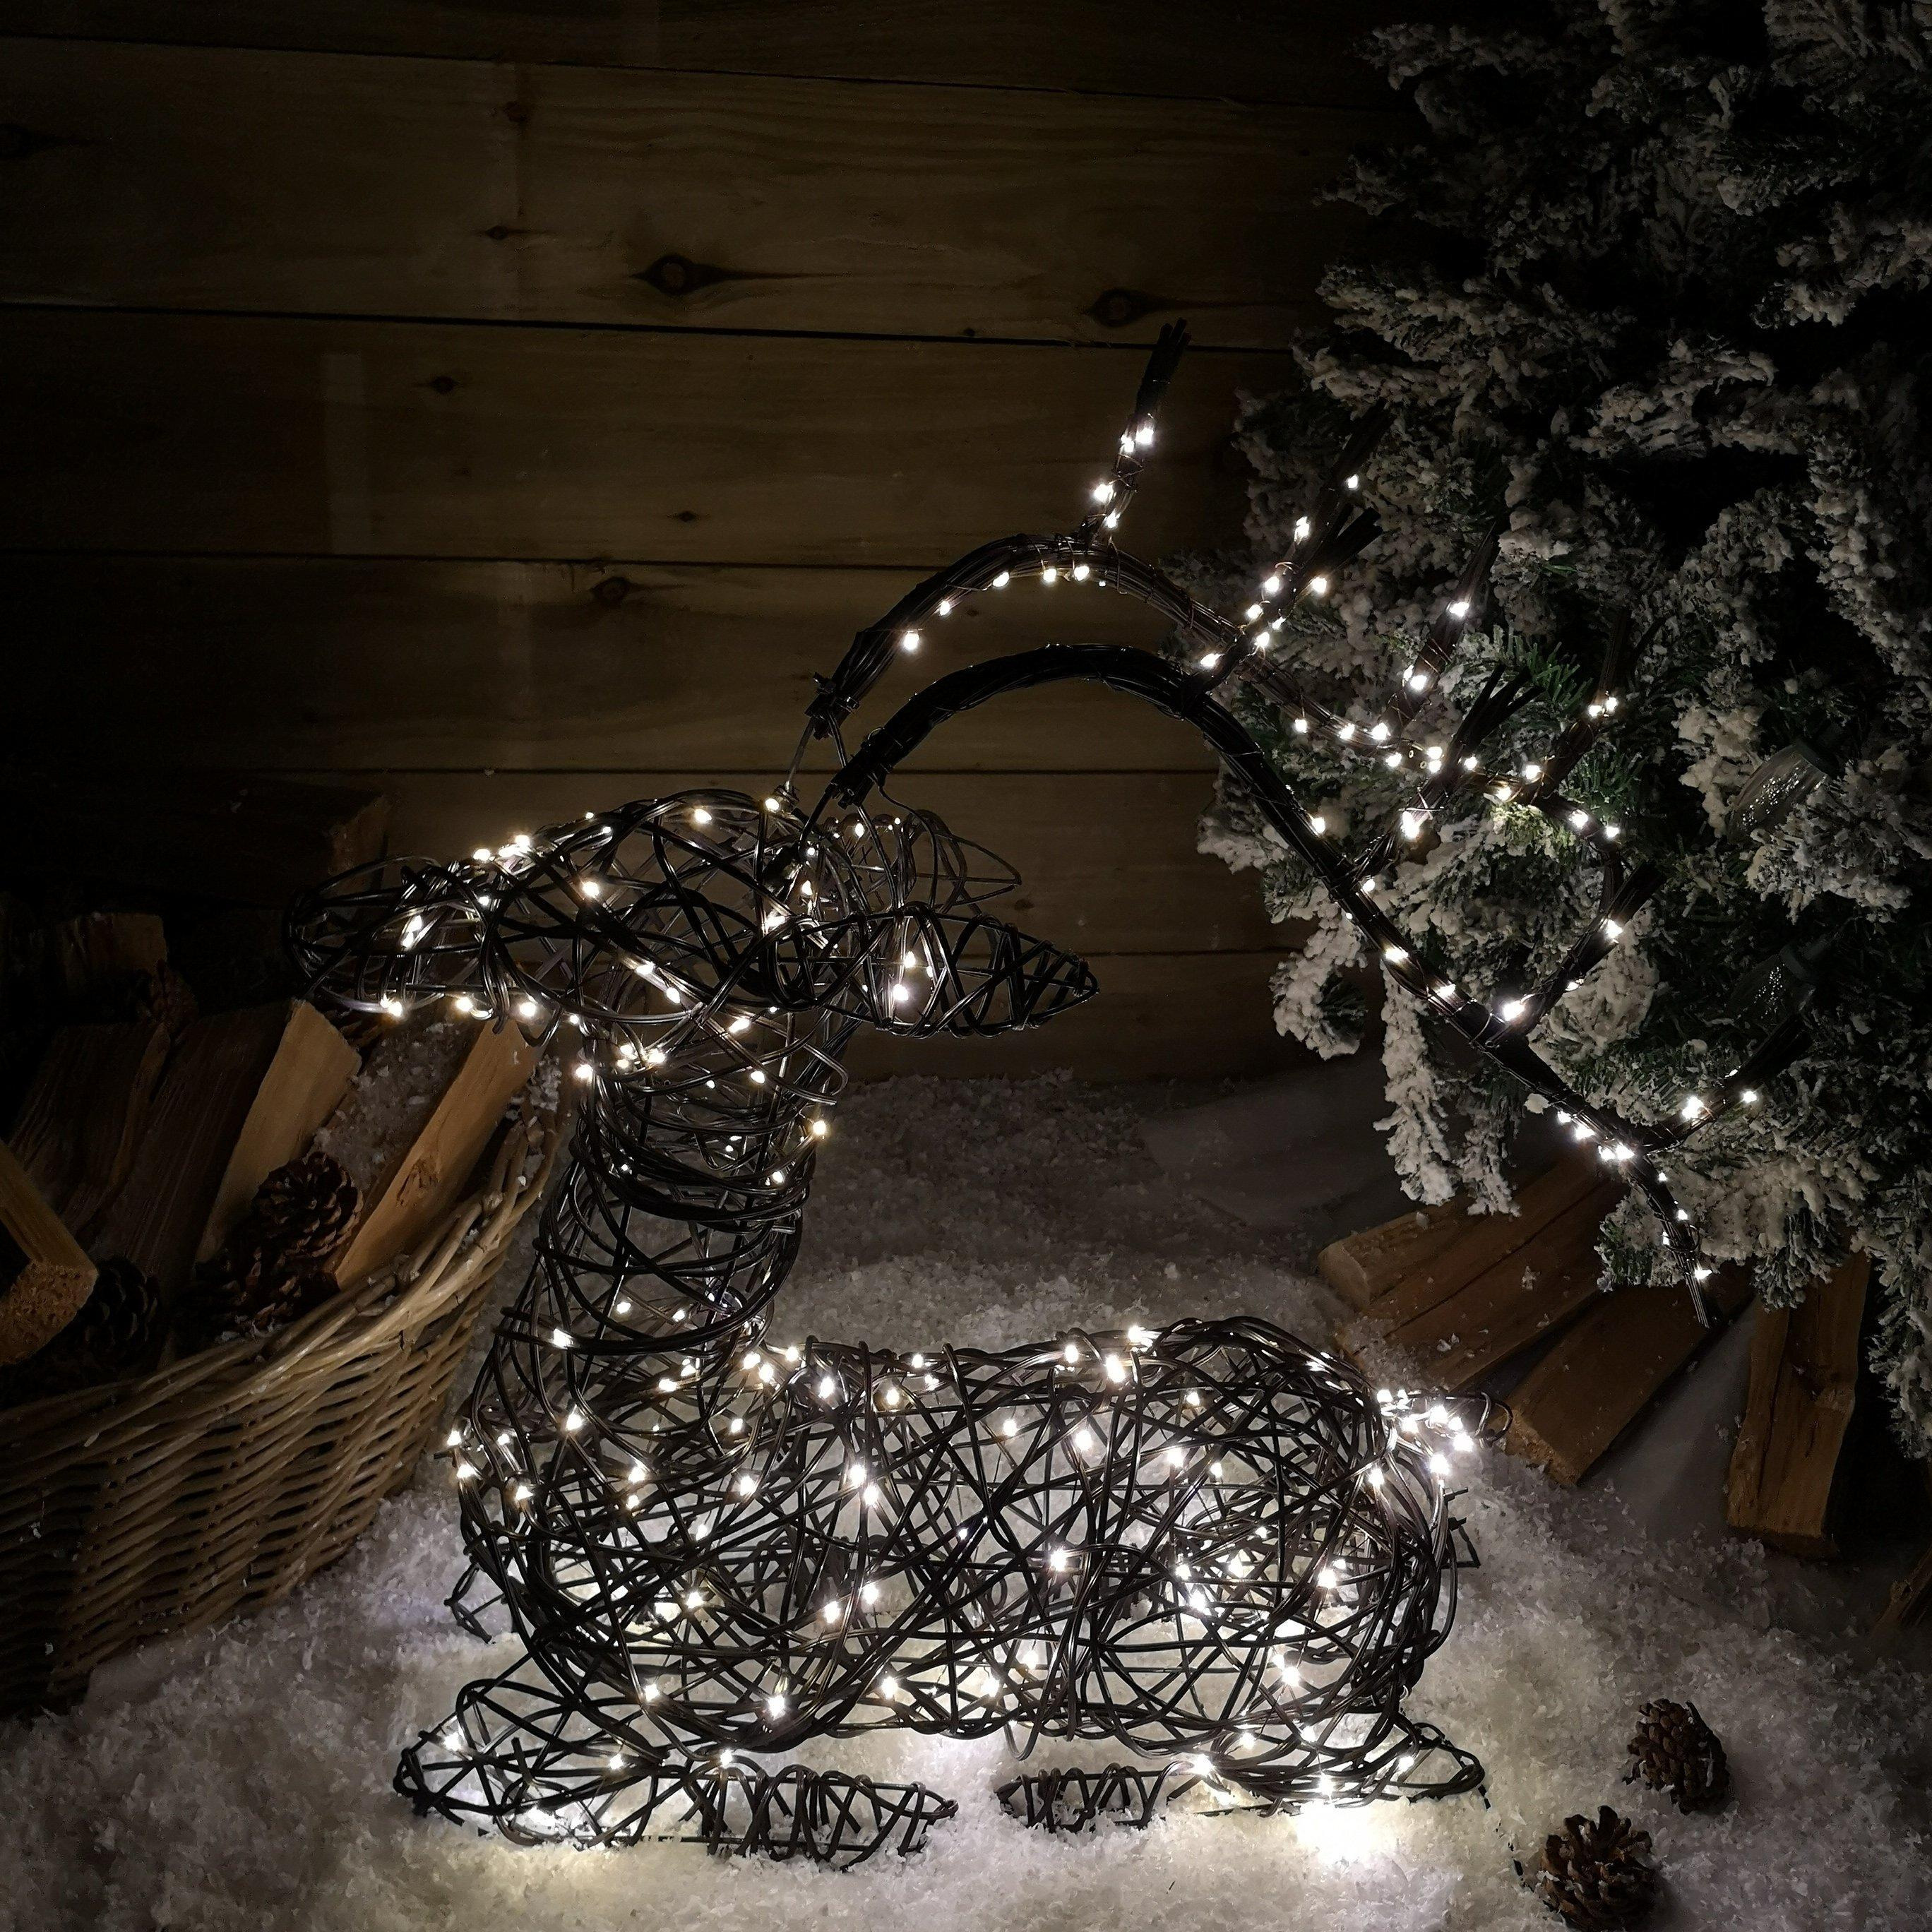 62cm LED Indoor Outdoor Wicker Sitting Reindeer Christmas Decoration - image 1